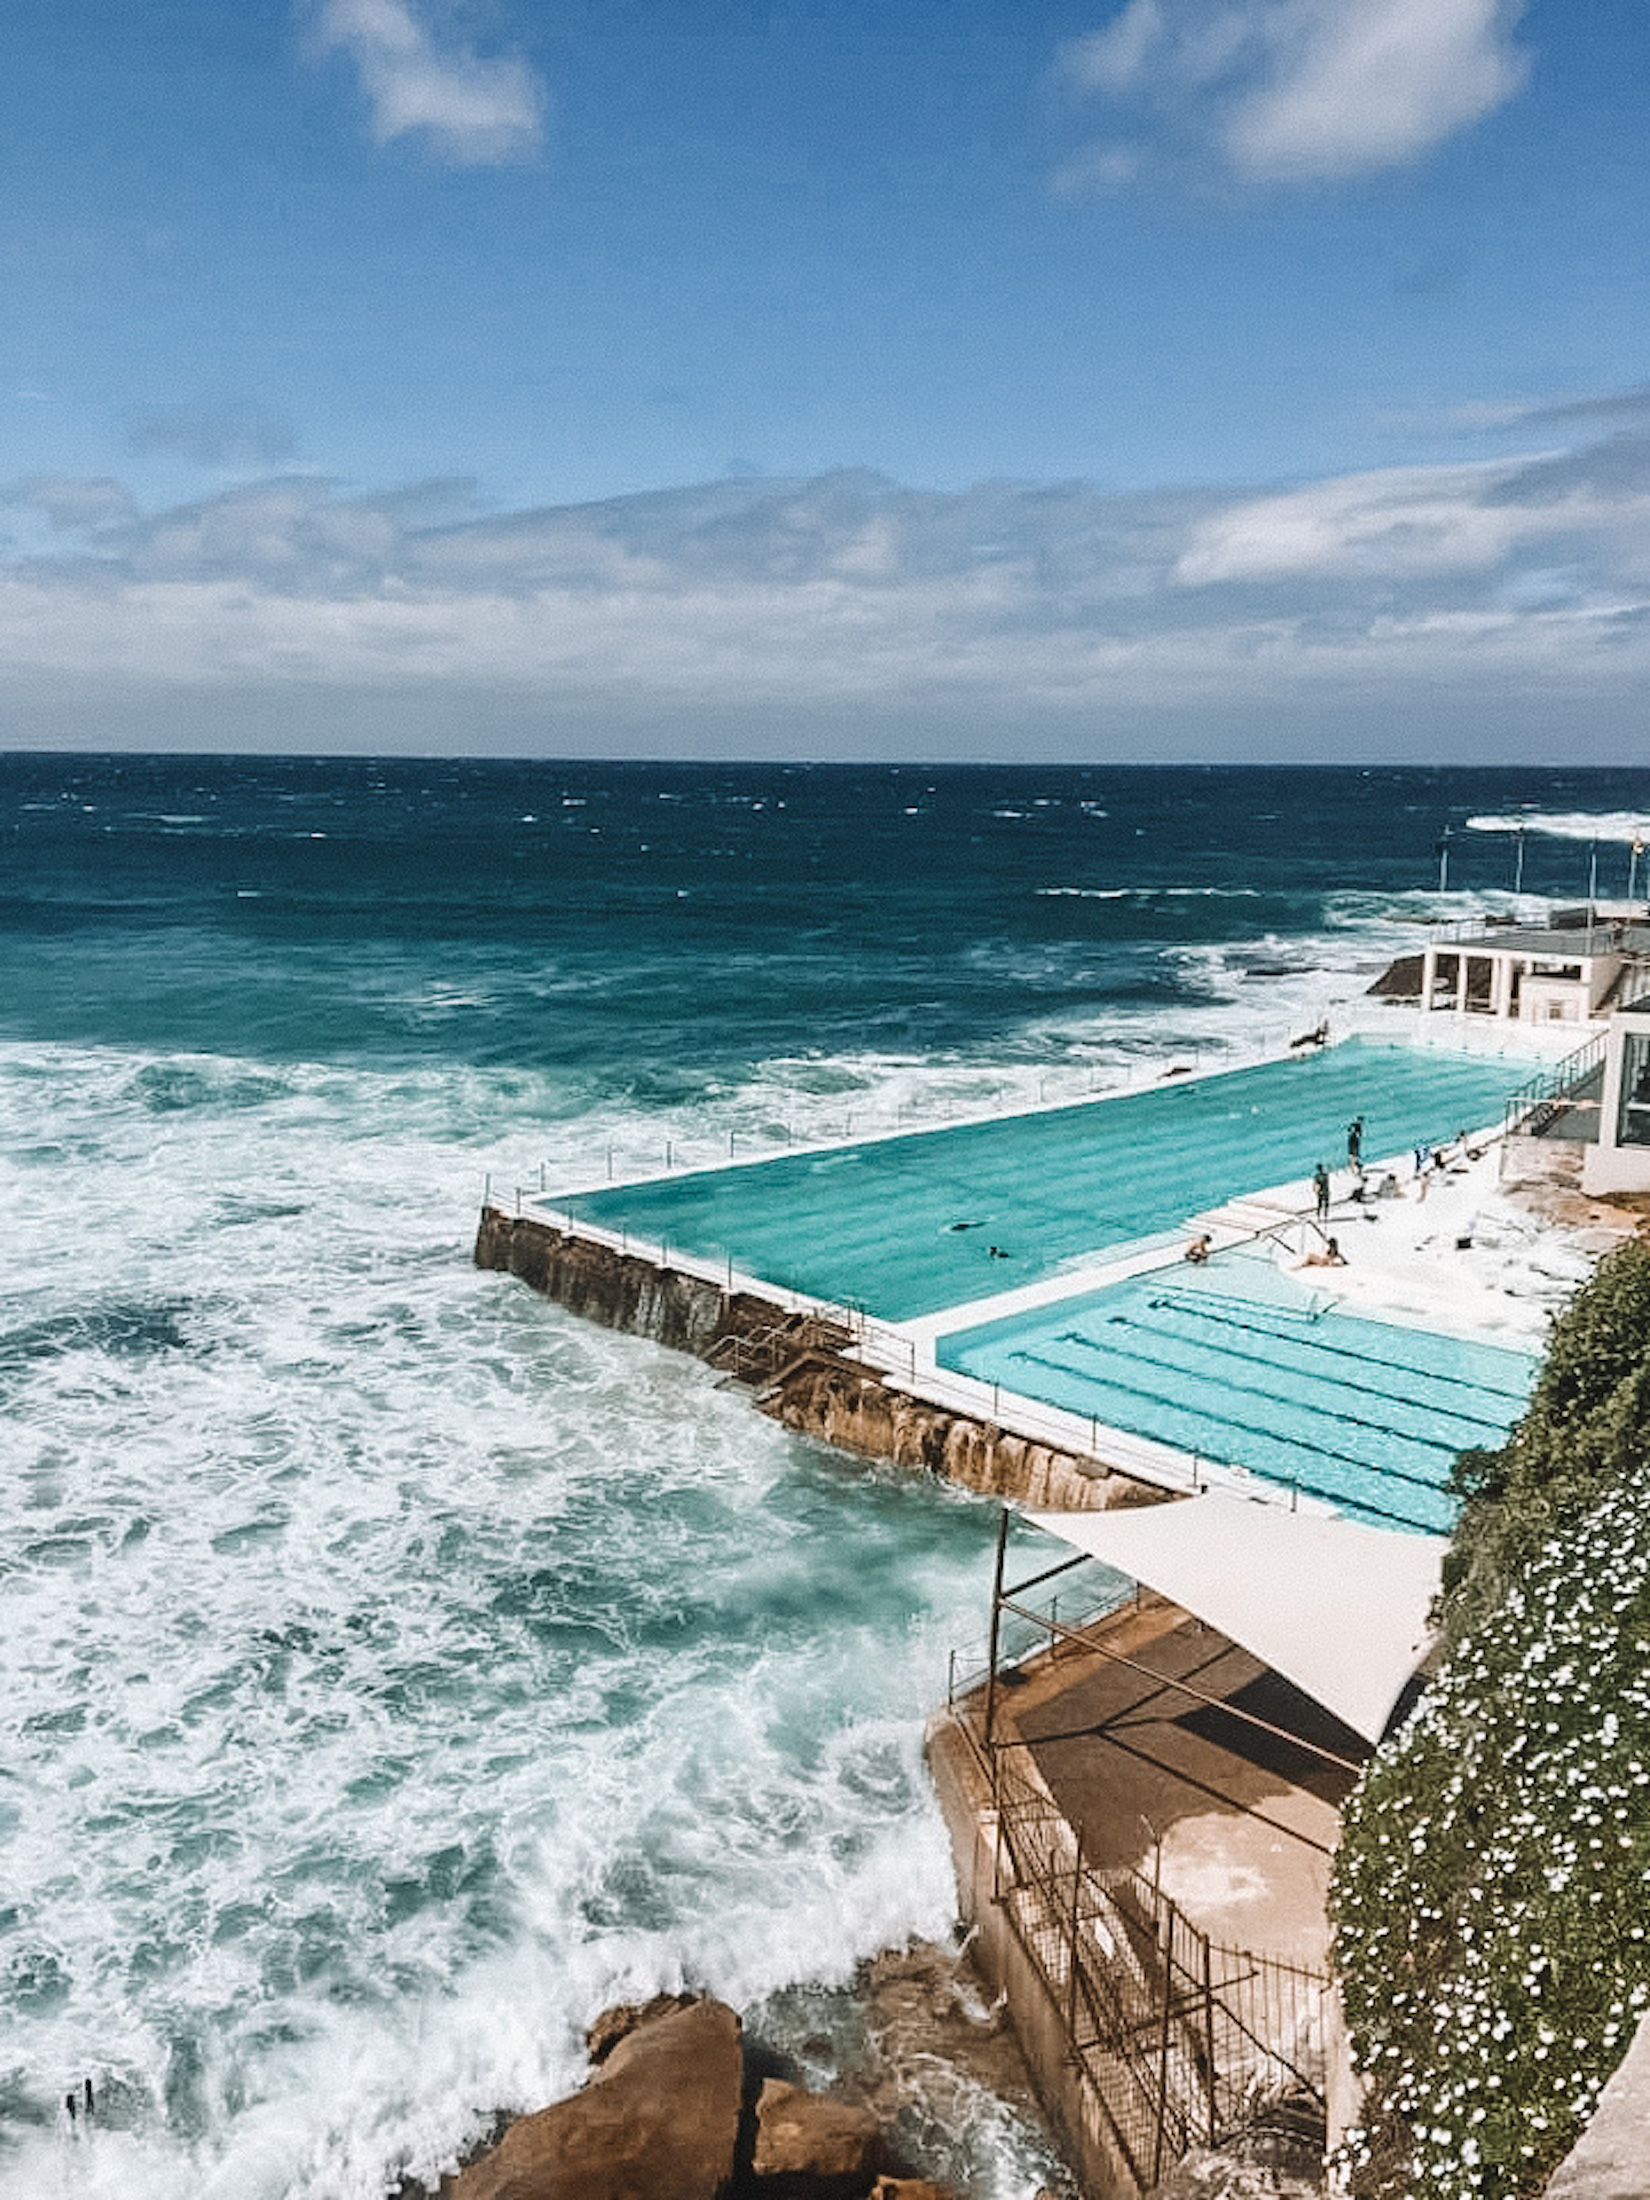 Swimming pool at Bondi Beach, Sydney, NSW, Australia